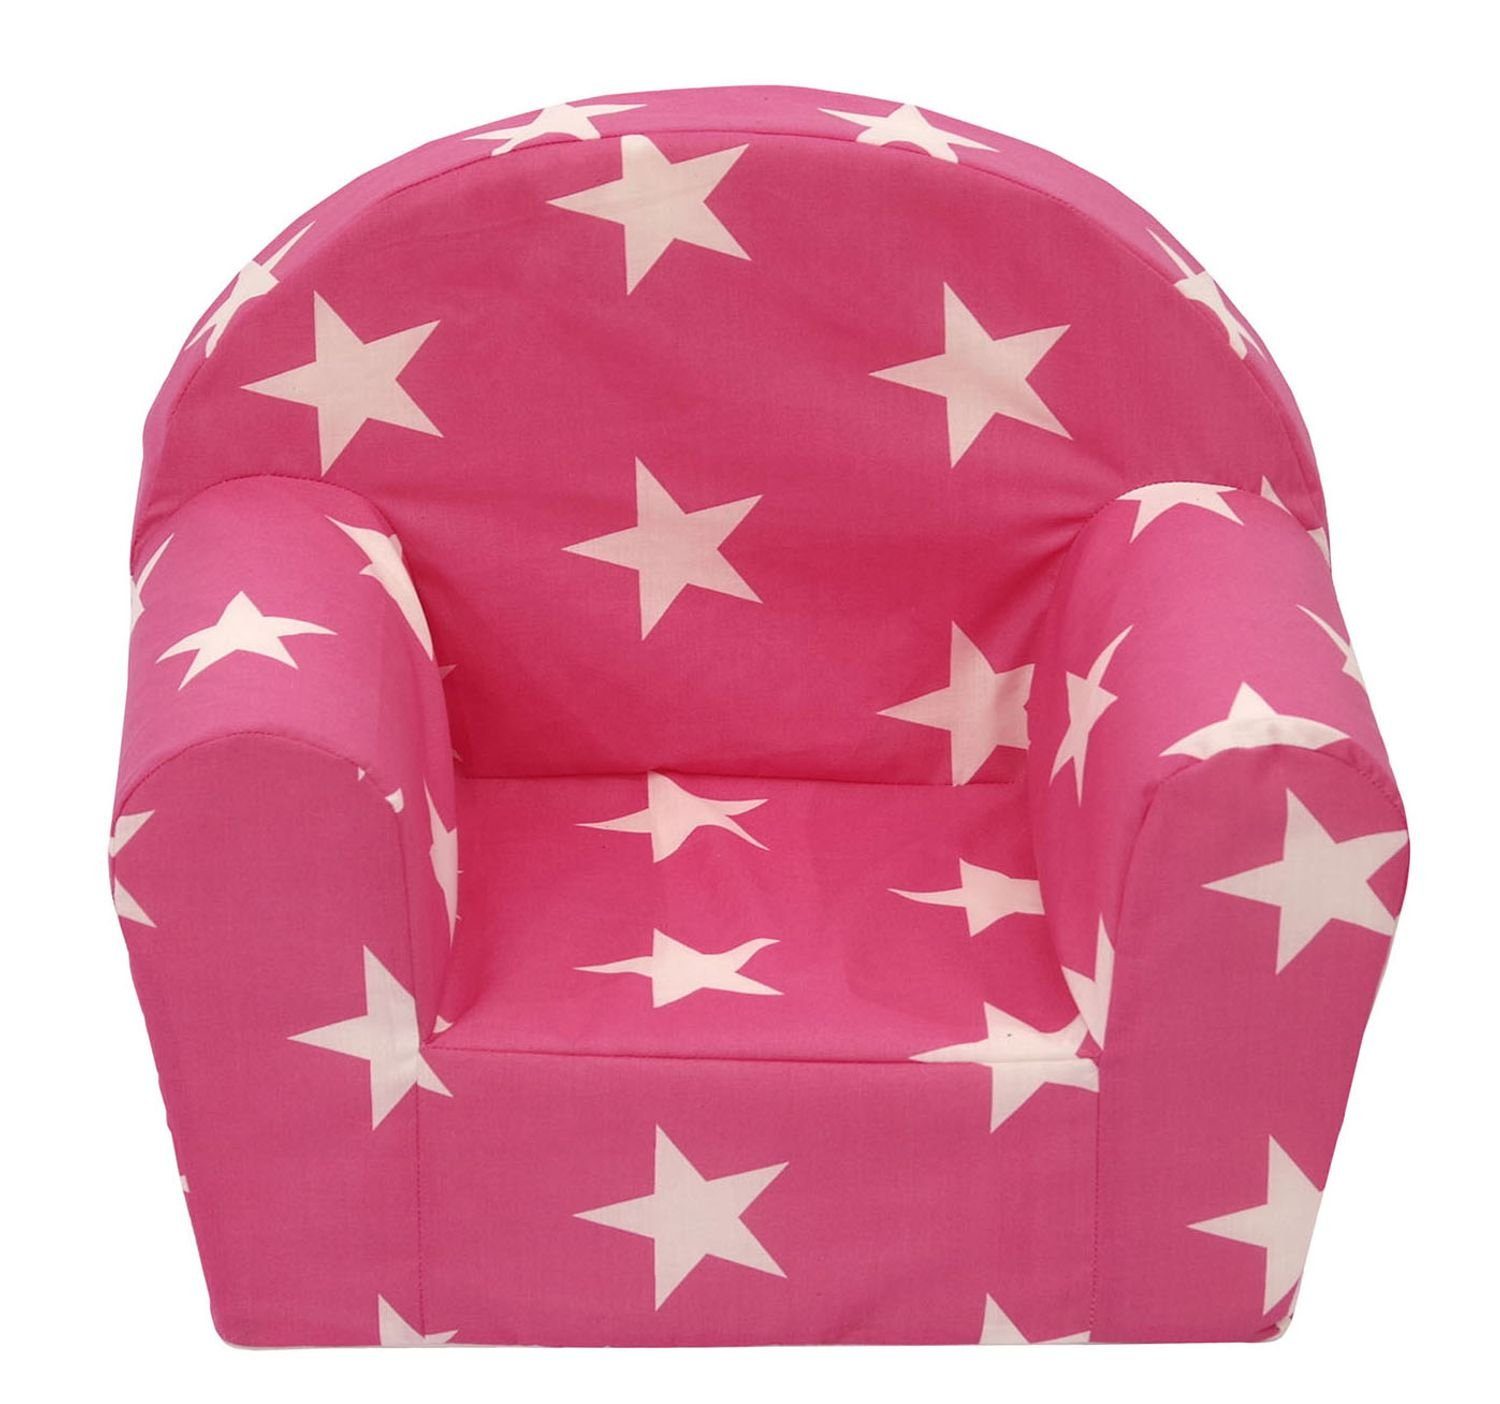 Gartensessel Sessel BURI pink Spielsessel Kindersofa Kindersessel Kinderzimmermöbel Kind